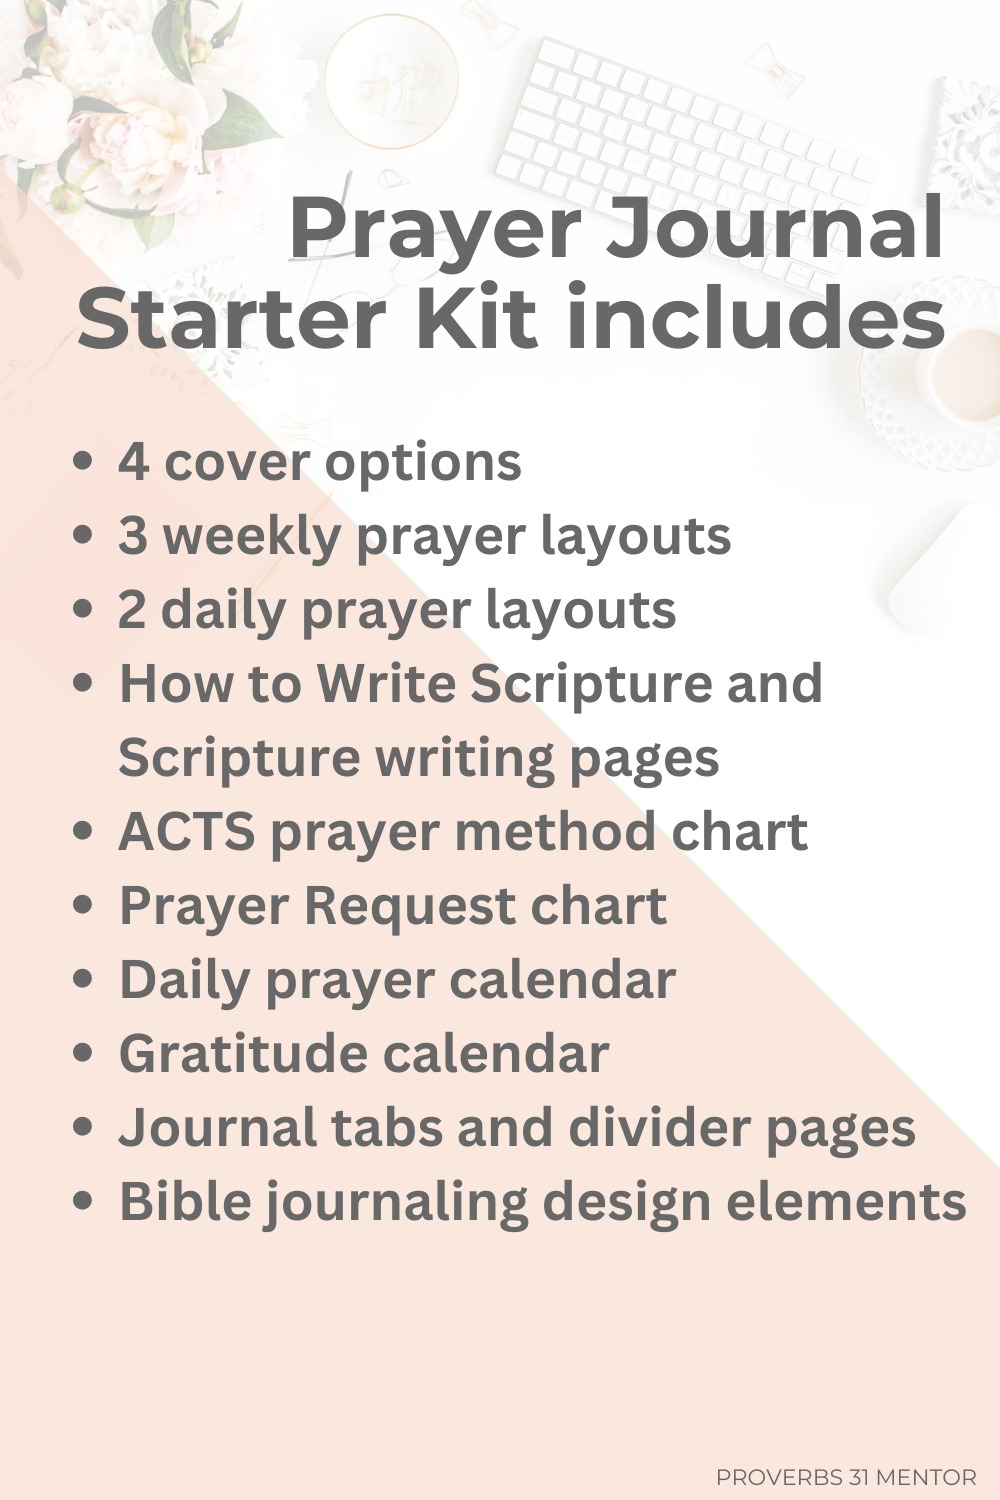 Prayer Journal Binder - 7.25 in x 9.25 in